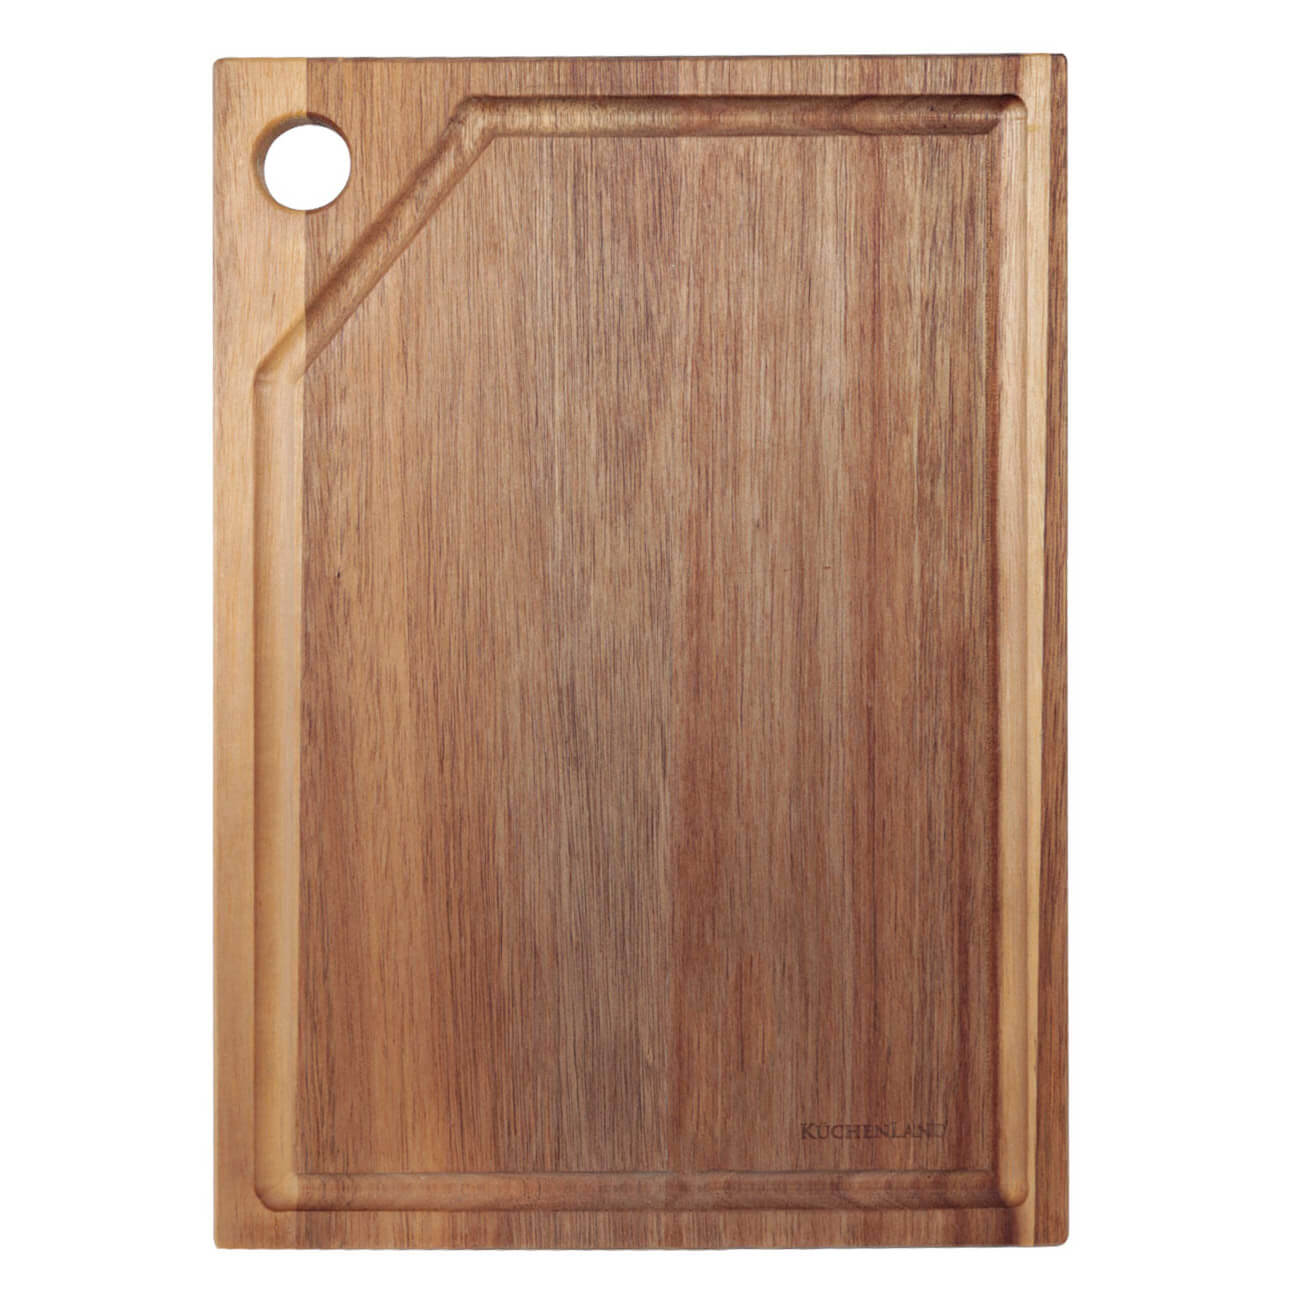 Cutting board, 33x25 cm, rectangular, wood, Noble tree изображение № 1